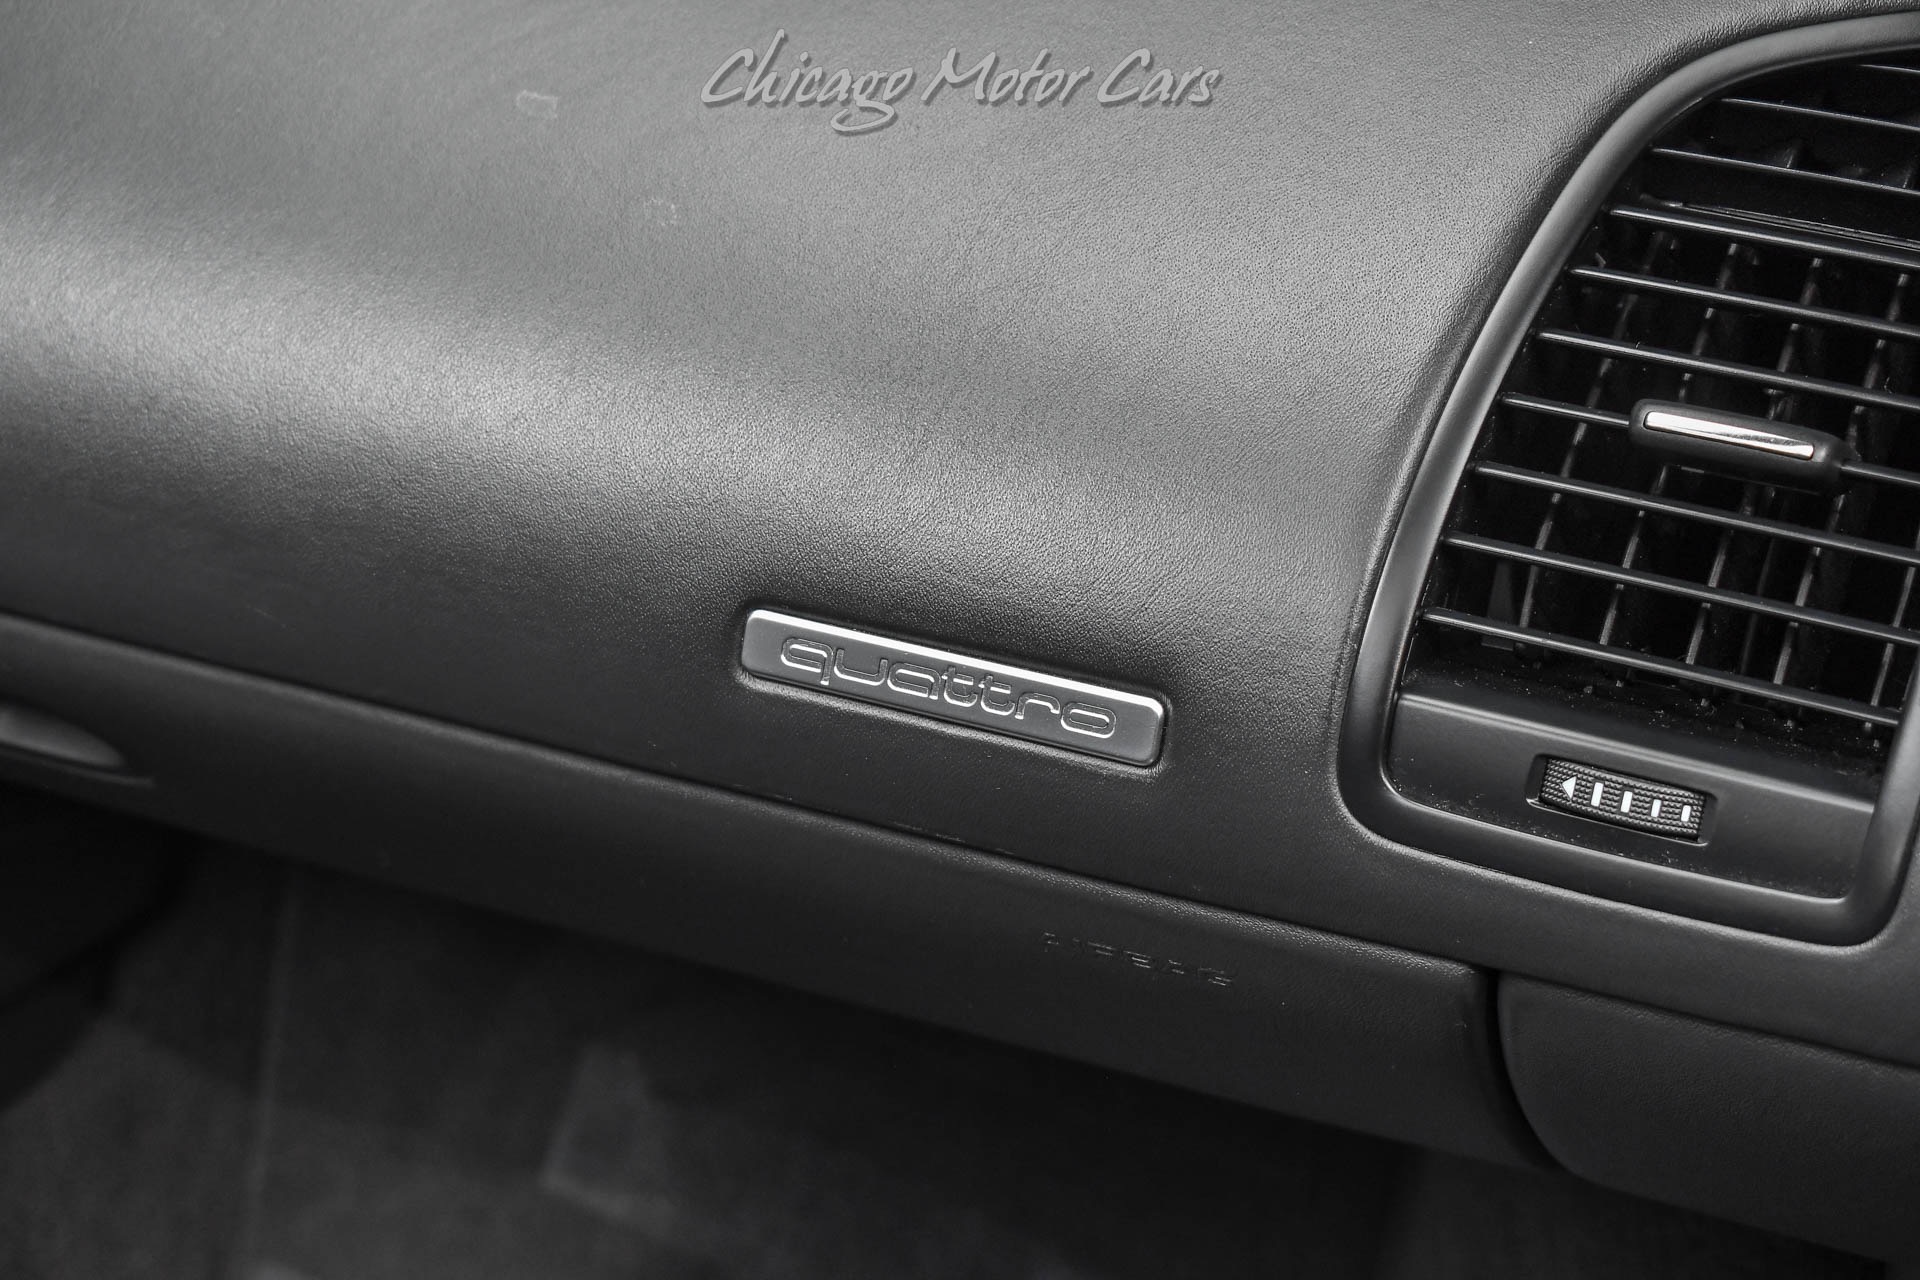 Used-2011-Audi-R8-52-quattro-Spyder-B-O-Audio-Audi-NAV-Plus-Enhanced-Leather-Pkg